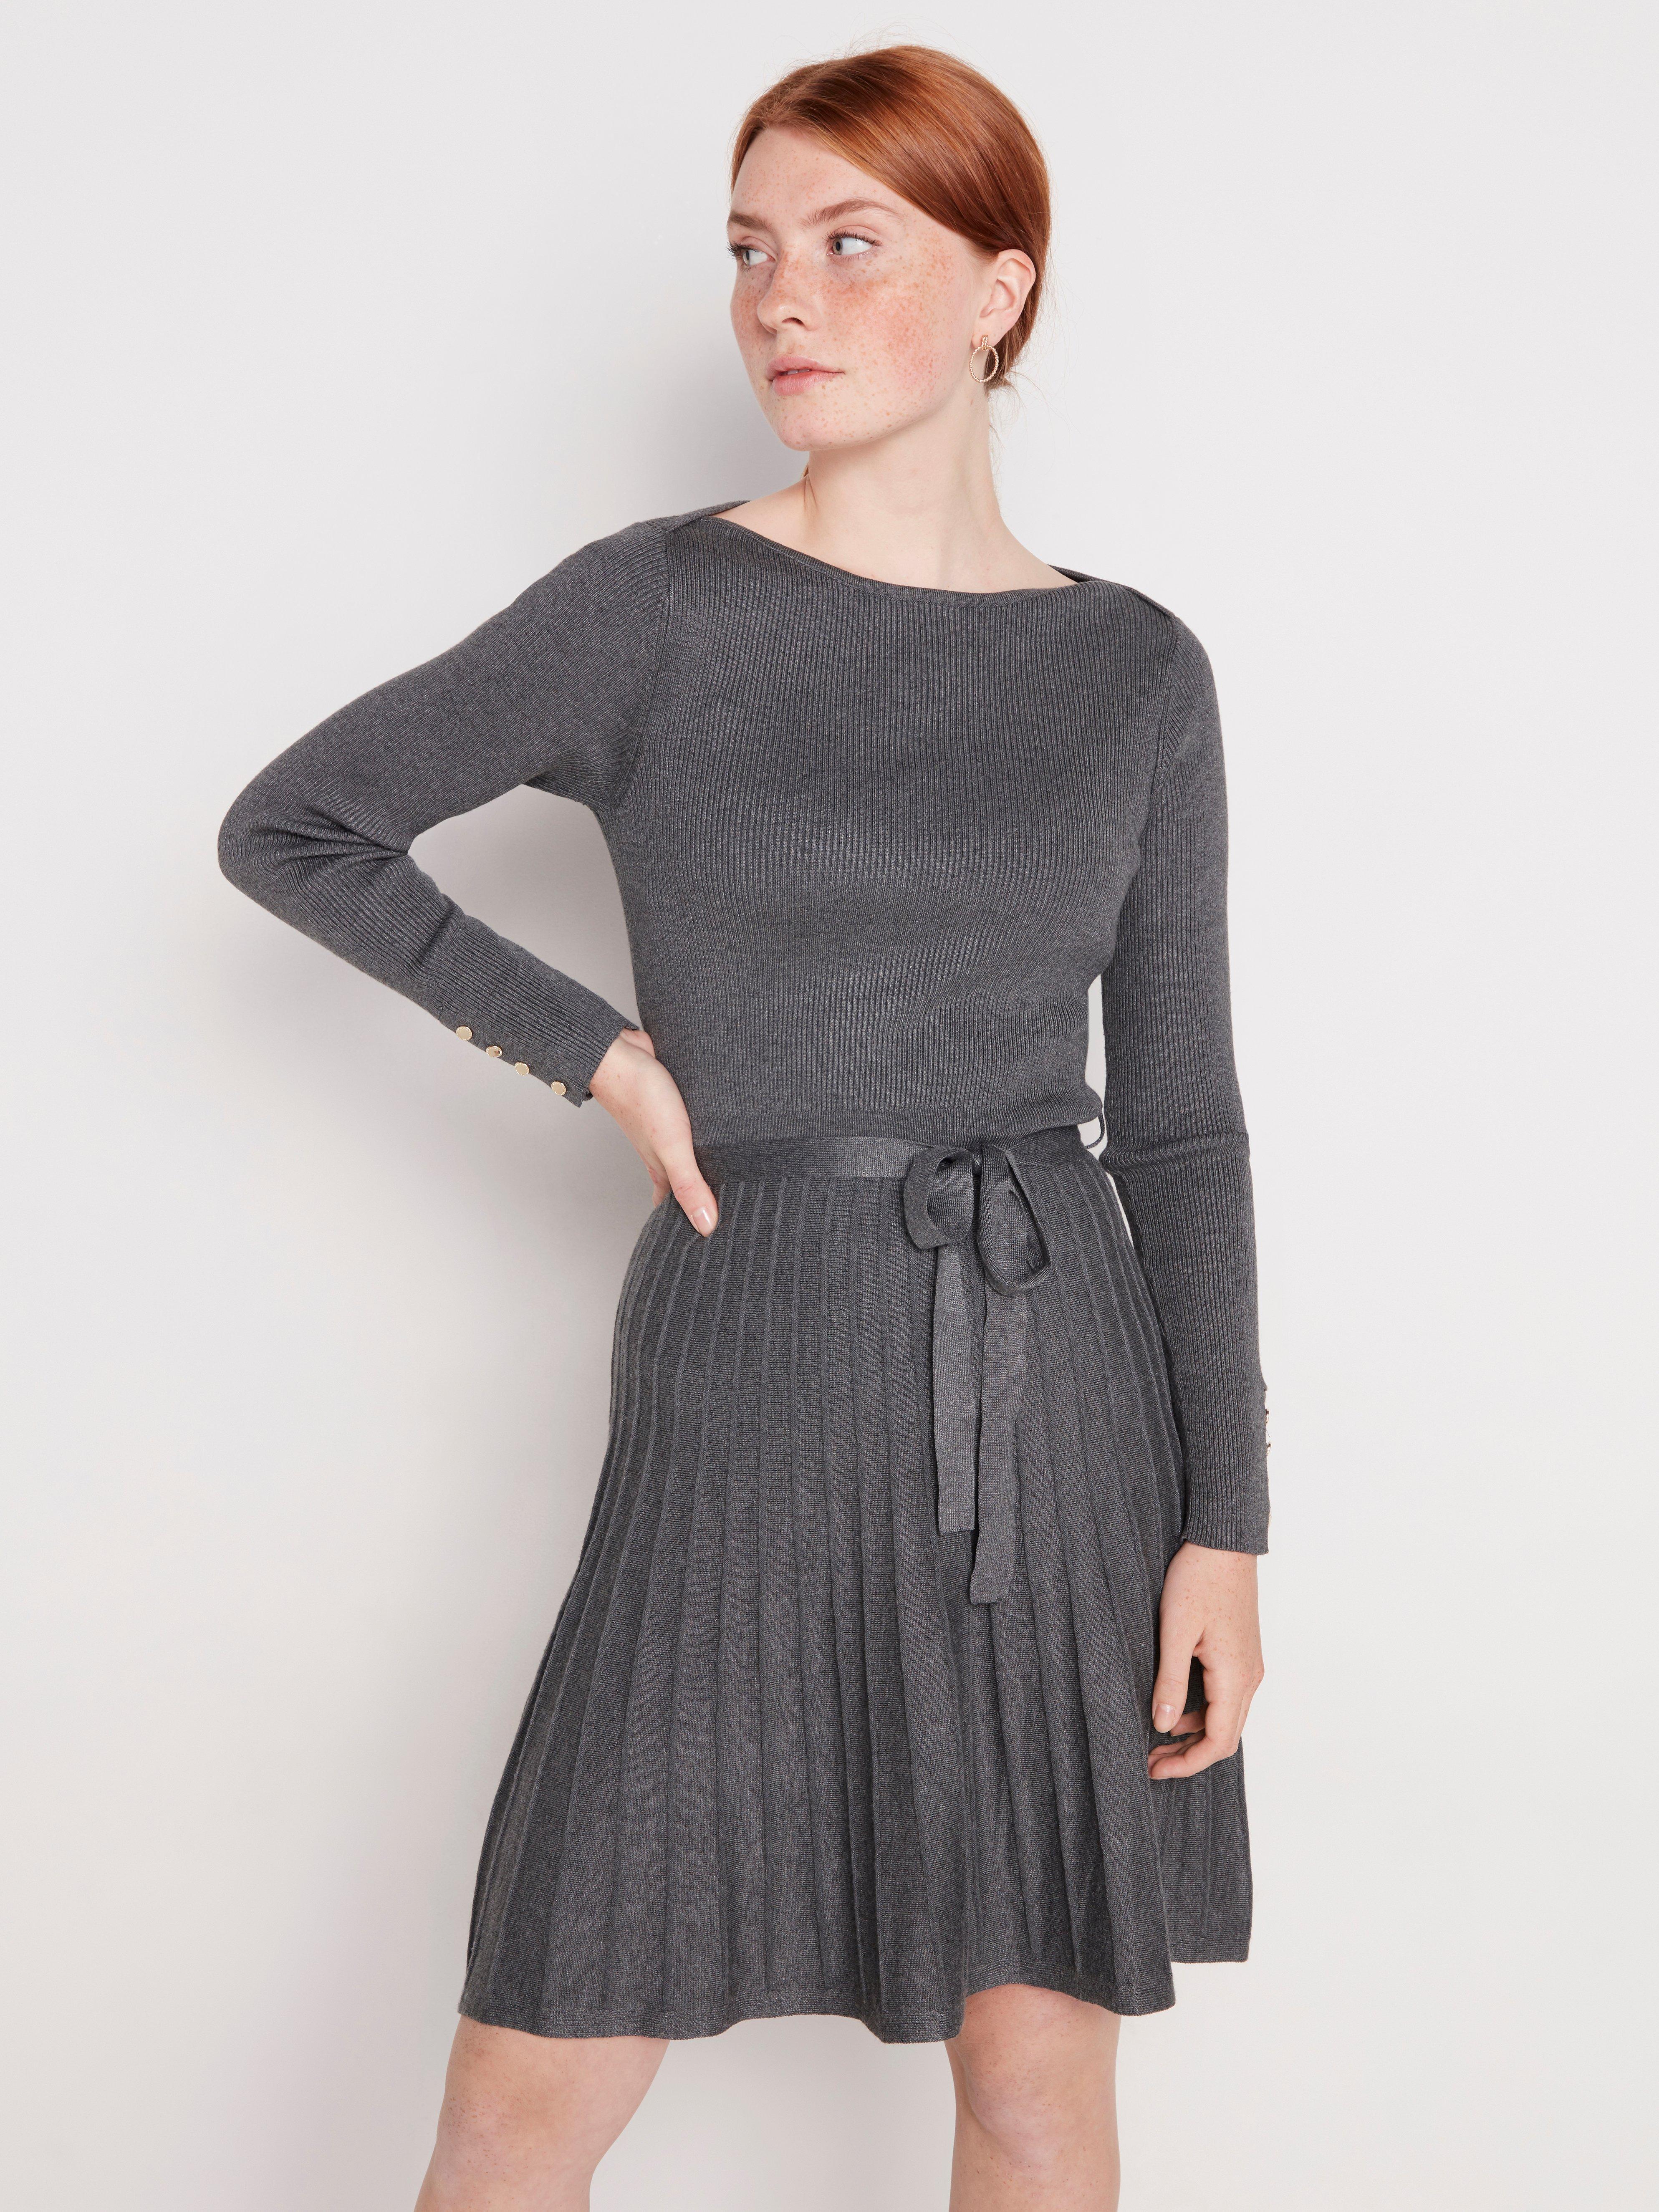 grey knitted dress uk